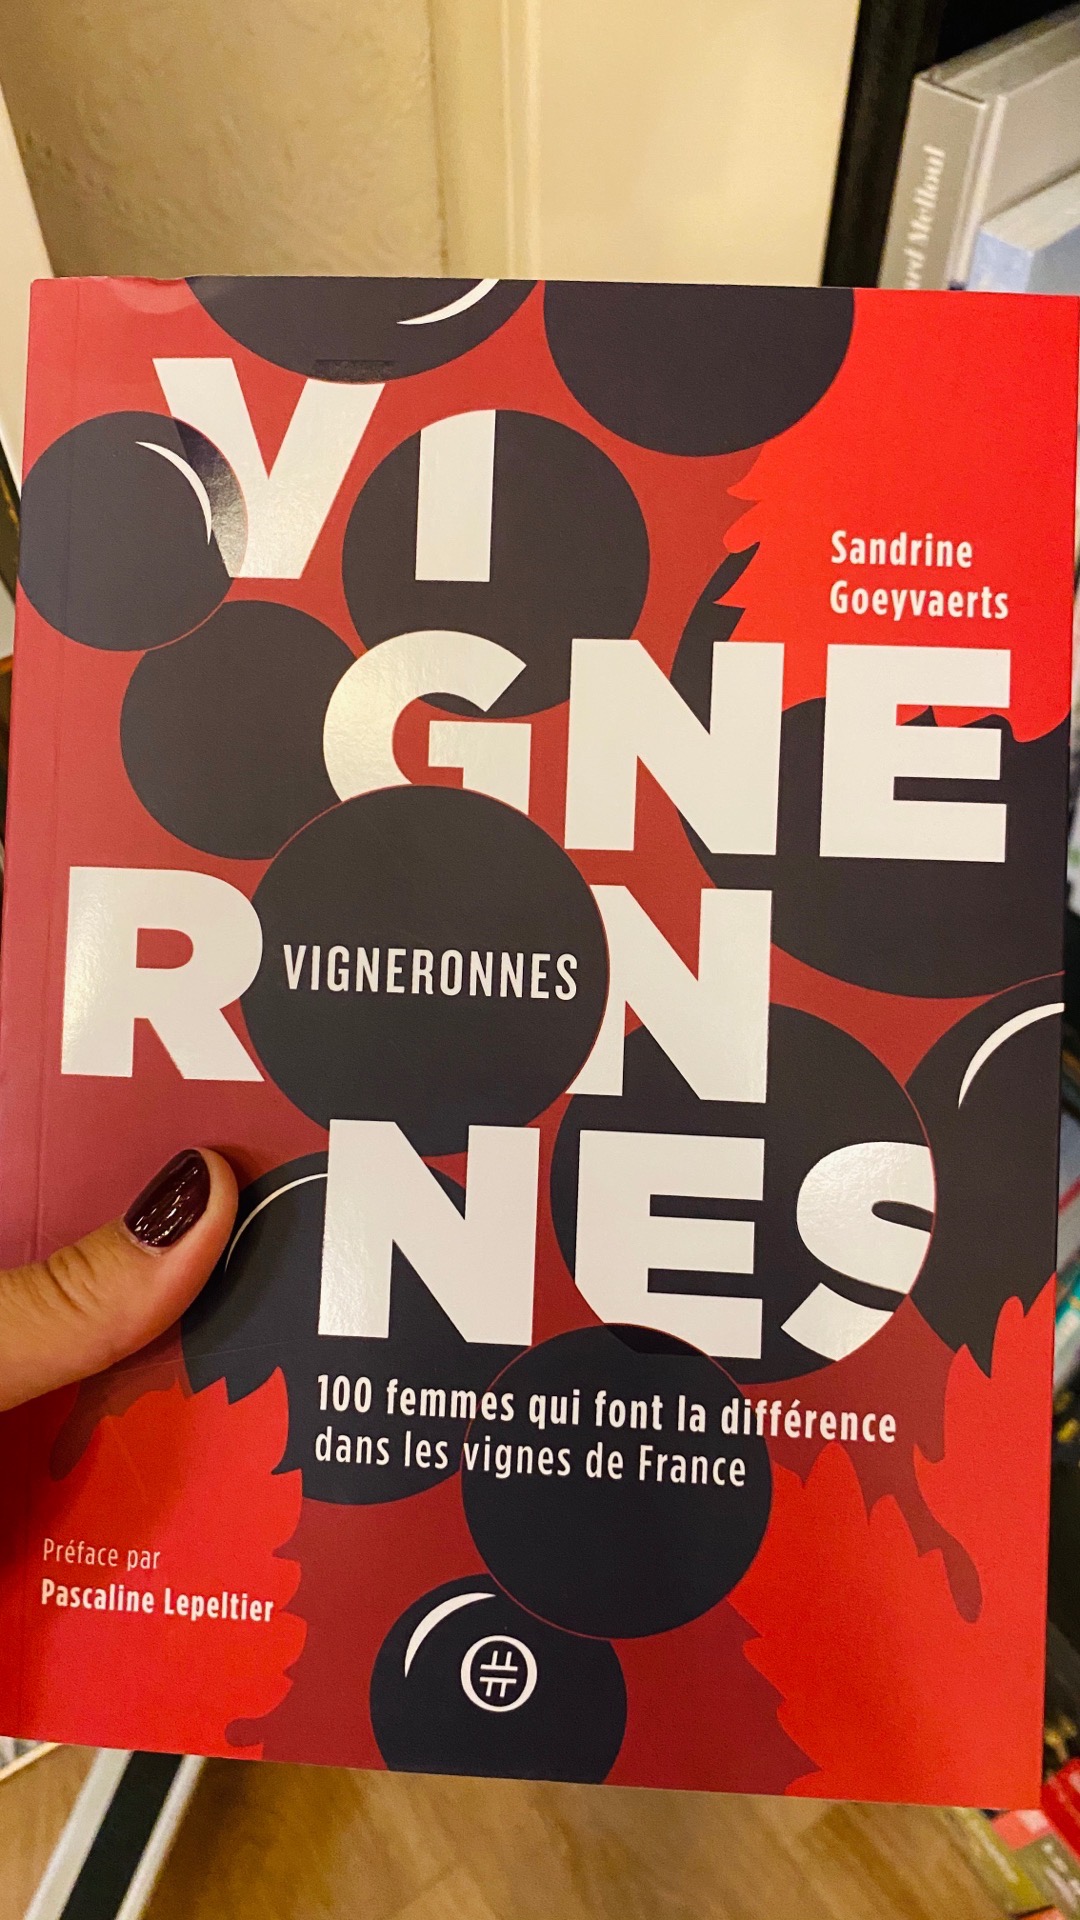 Vigneronnes de Sandrine Goeyvaerts